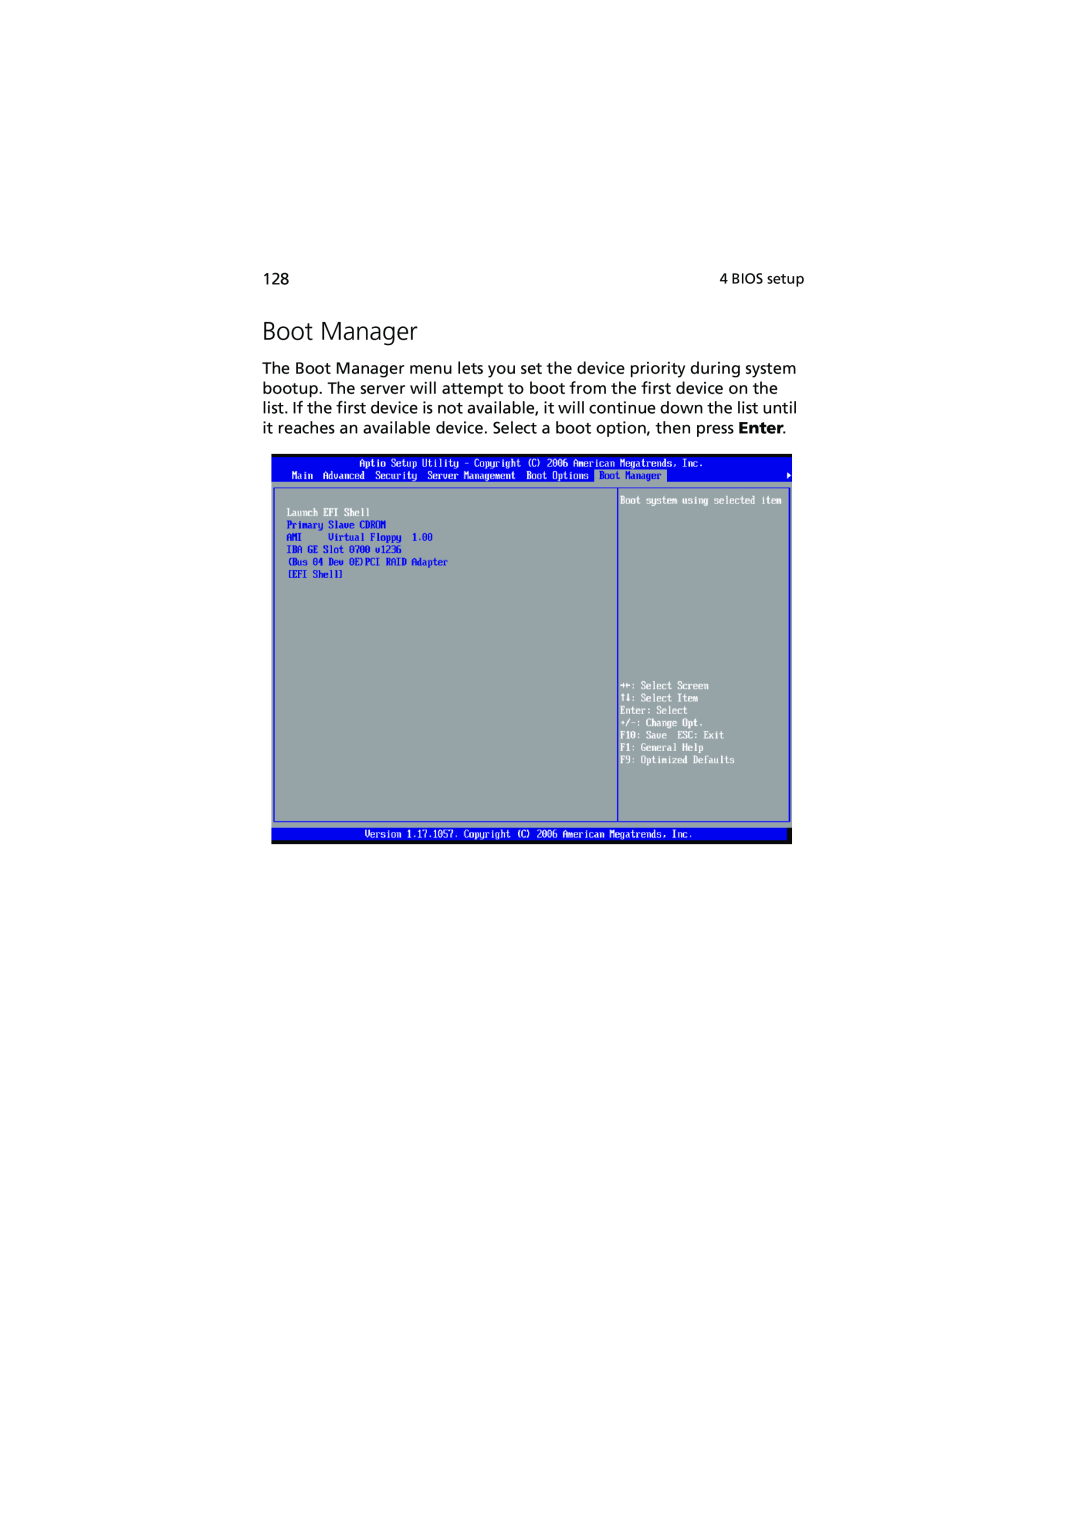 Acer R720 Series manual Boot Manager, BIOS setup 